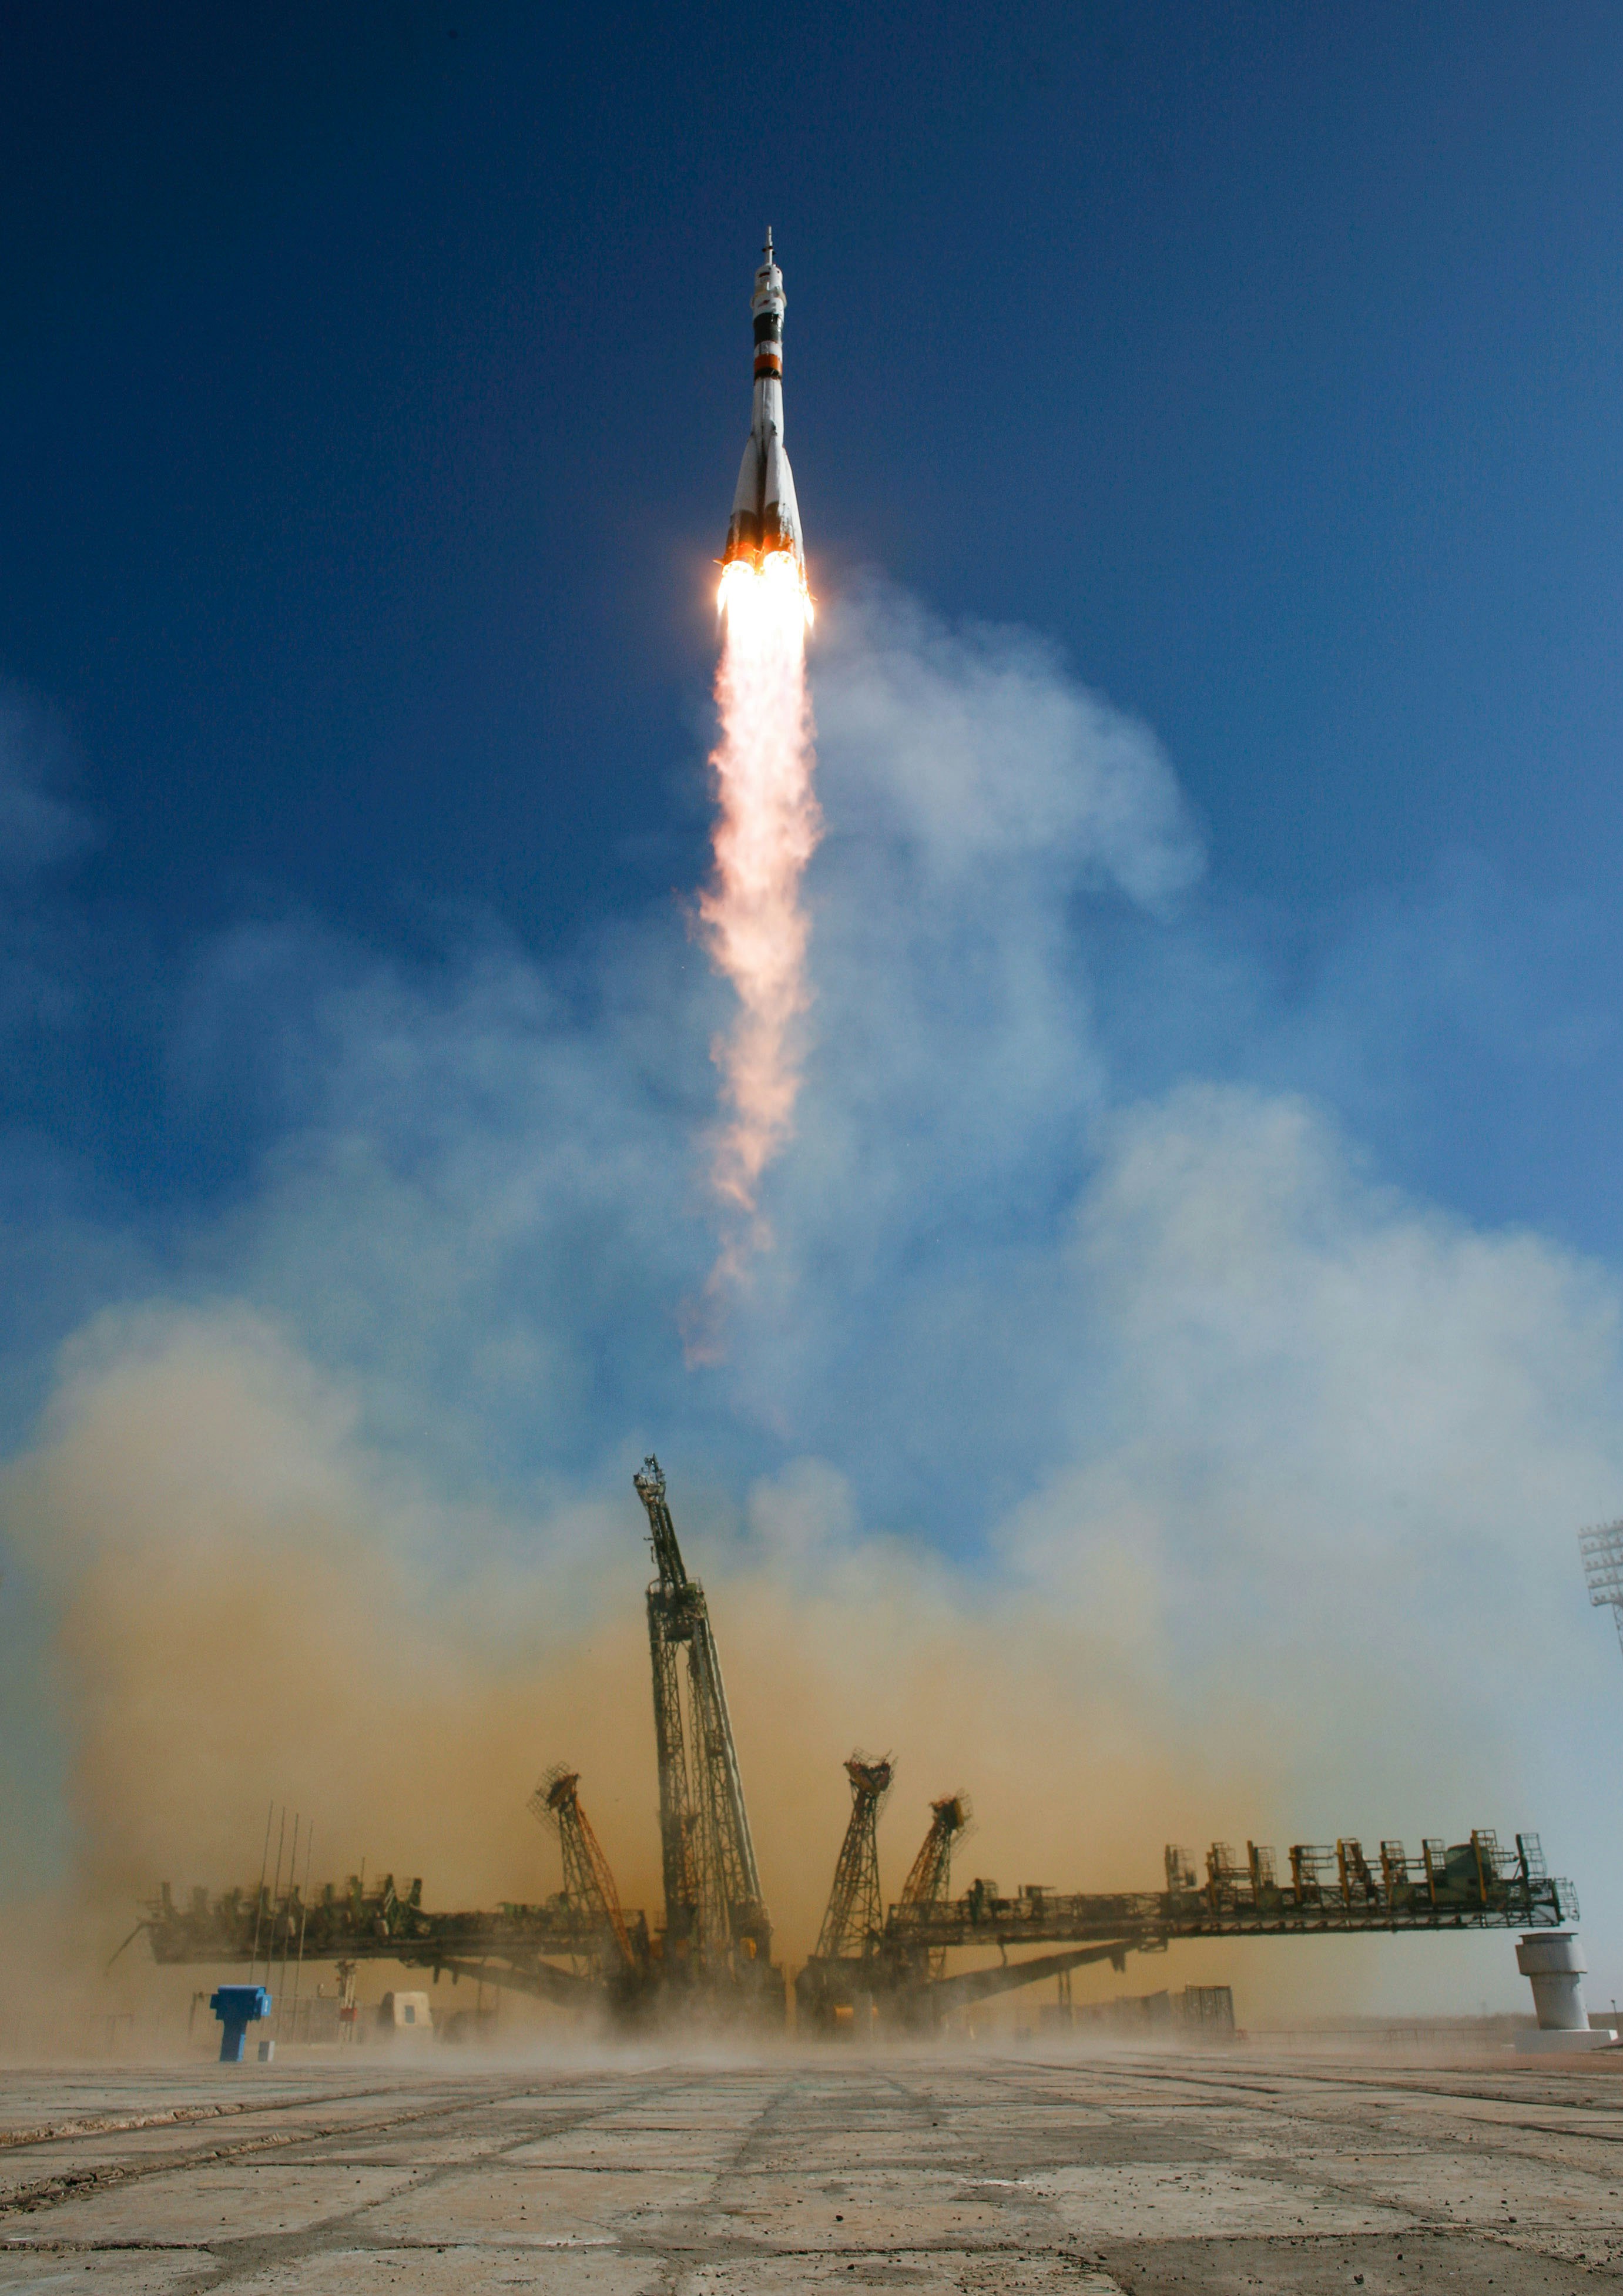 Soyuz TMA-16 launches from the Baikonur Cosmodrome in Kazakhstan in 2009